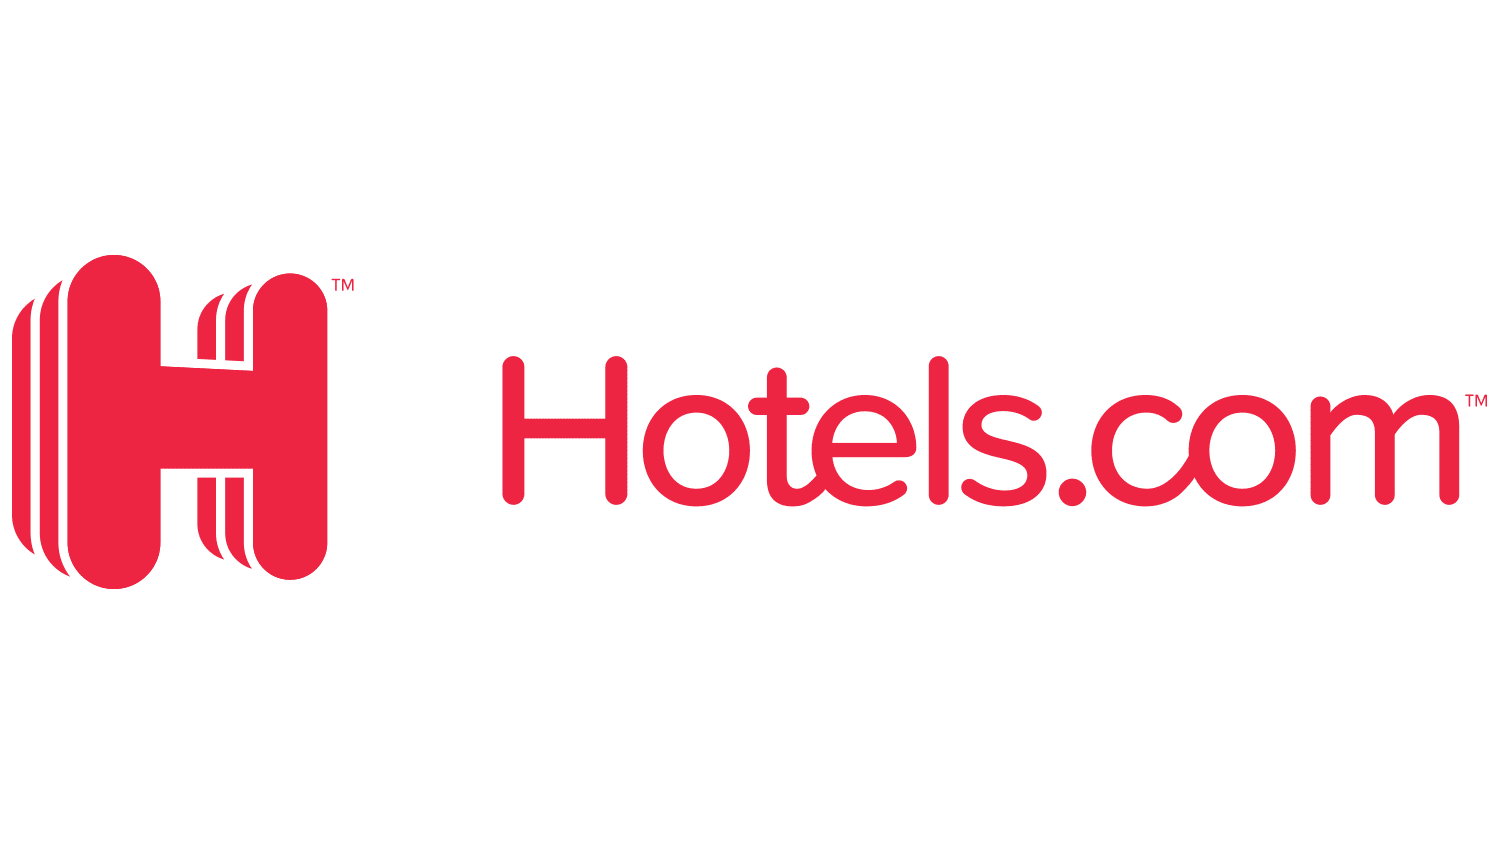 hotels logo 31012018 1 edited